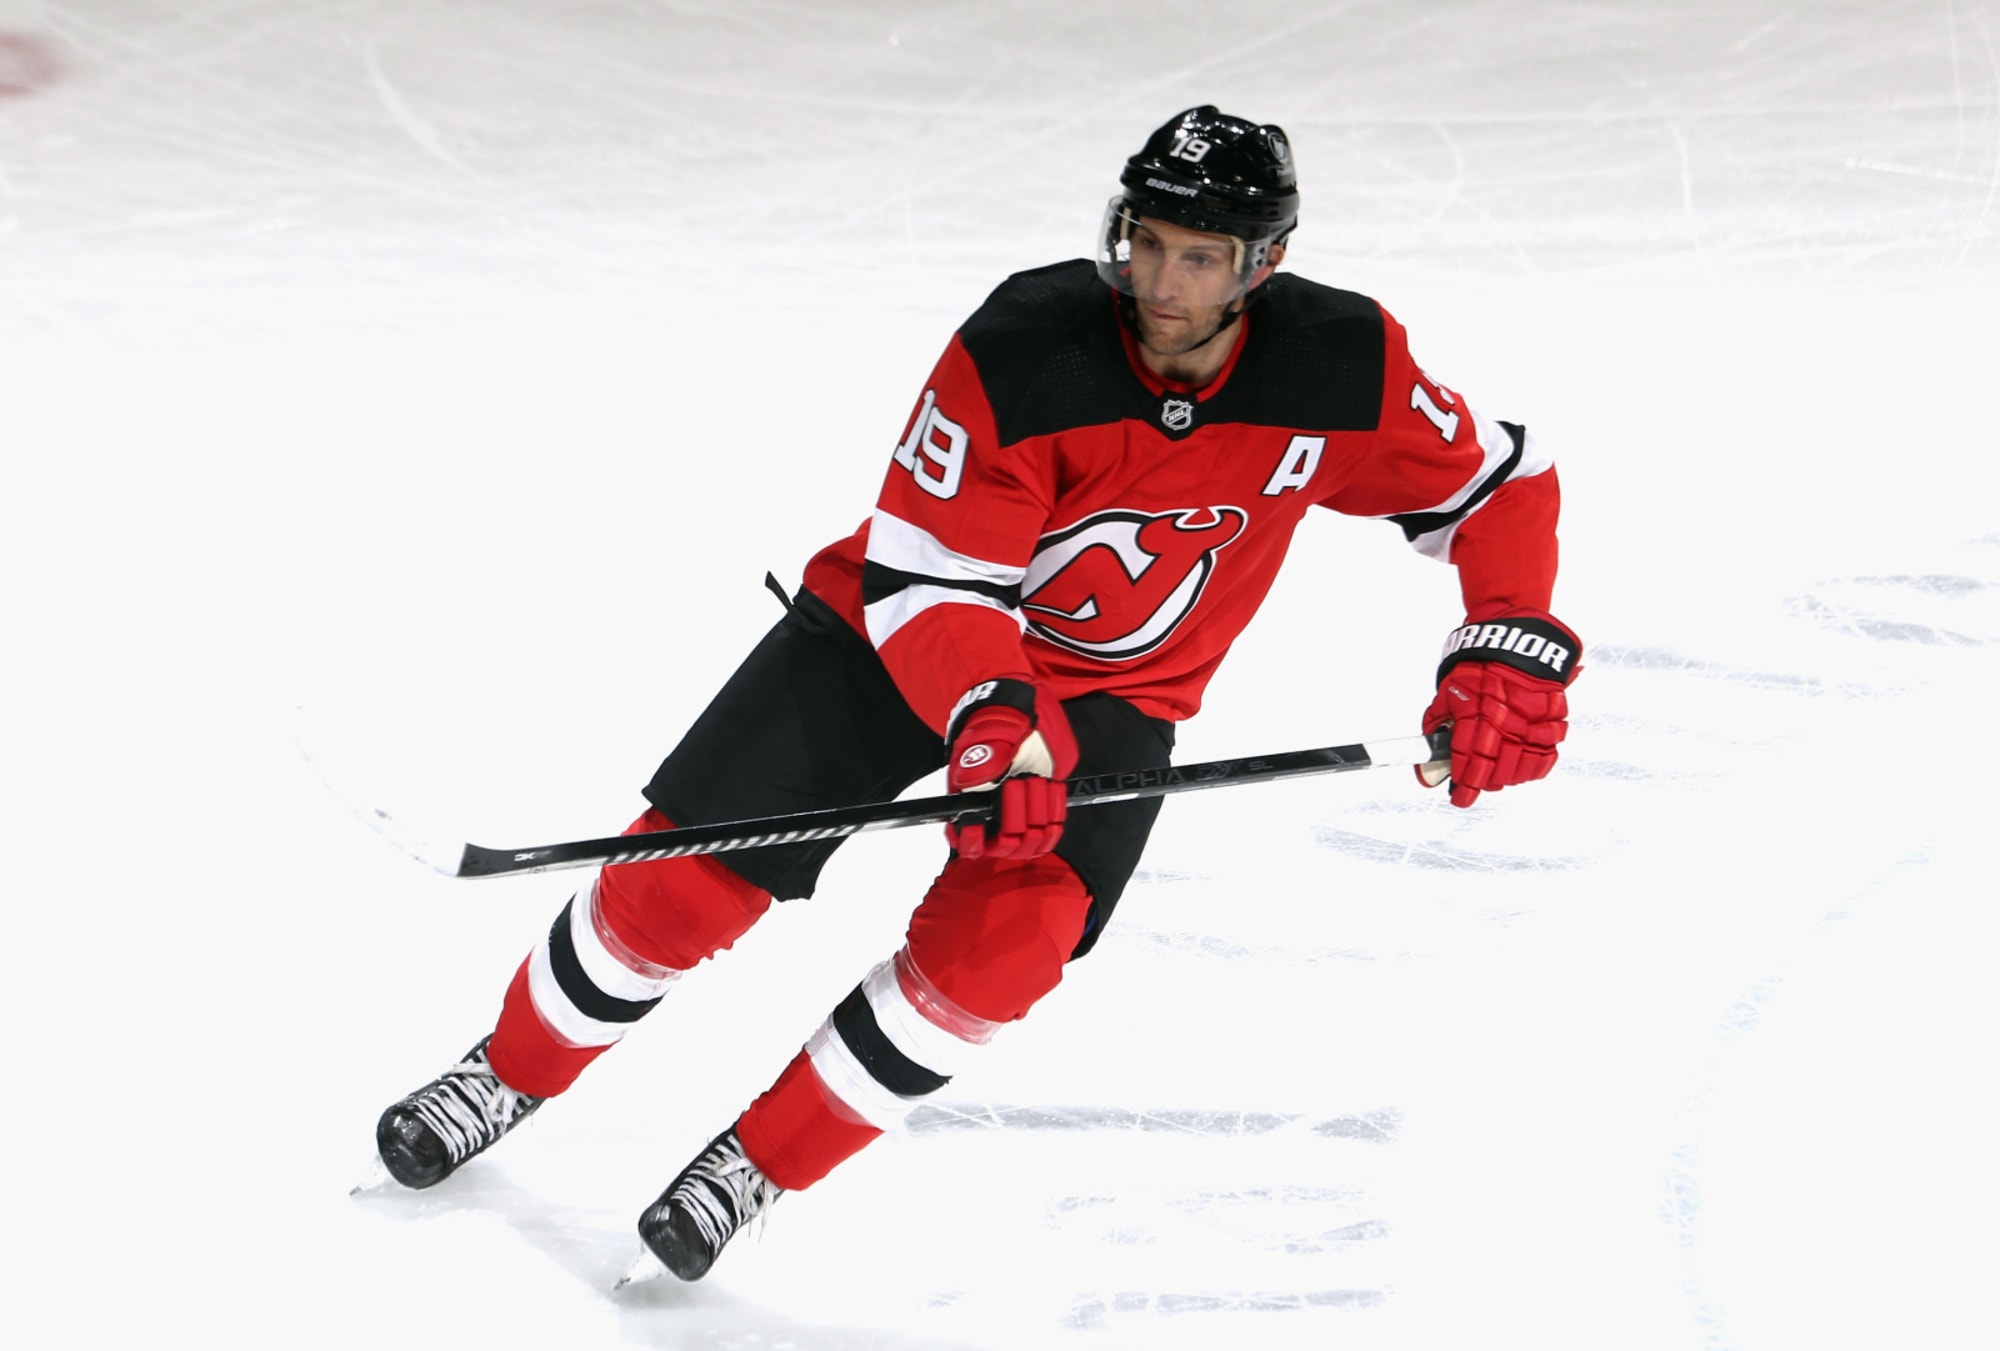 Scott Stevens of the New Jersey Devils skates on the ice during